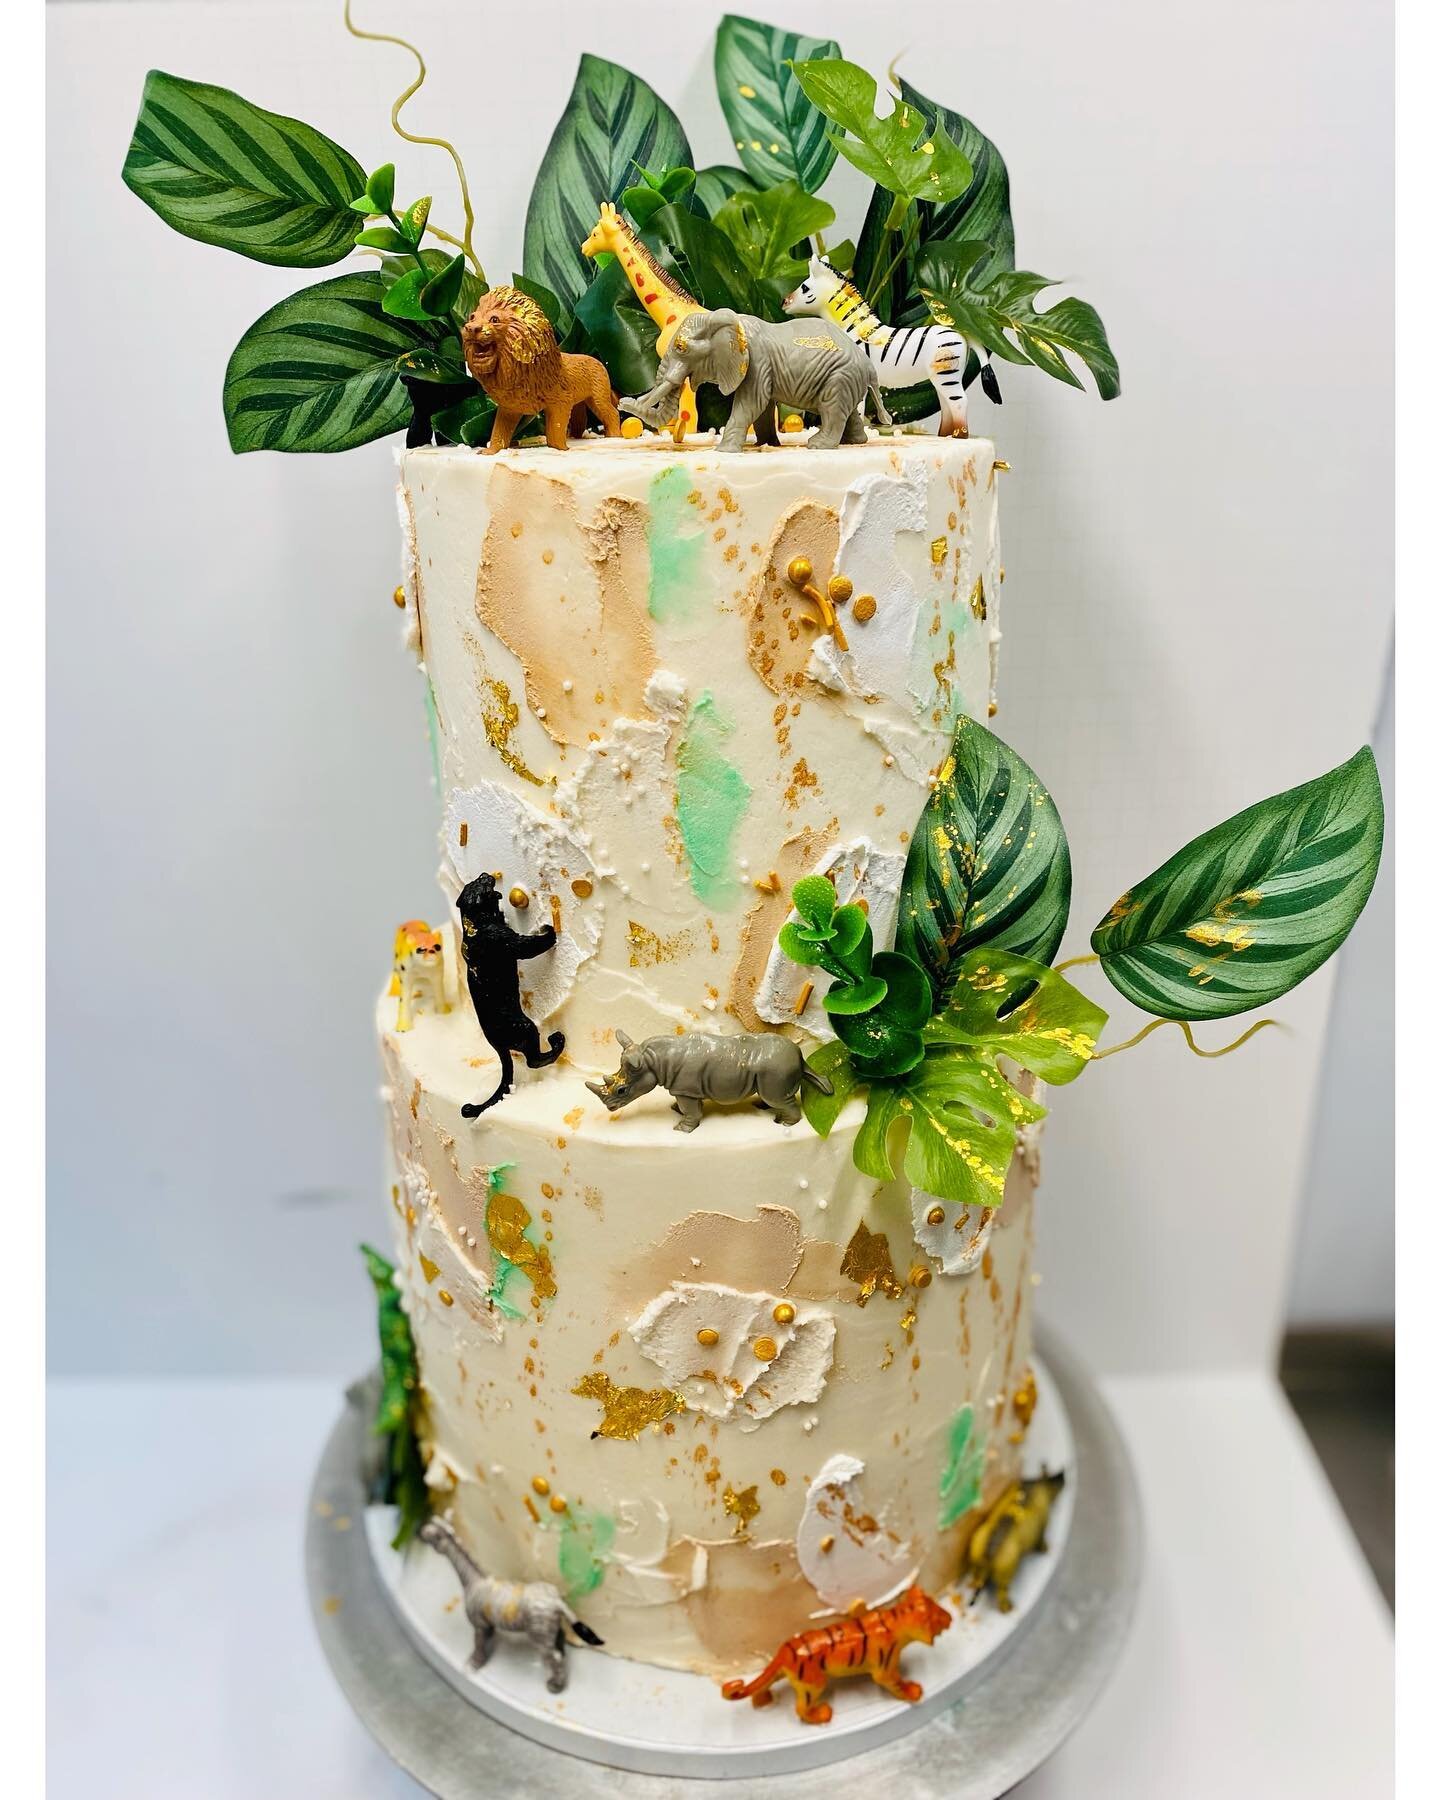 Wild One Birthday Cake and Smash Cake 🐯🦁buttercream cake with sprinkles and animal figurines ✨
.
.
.
.
.
.
.
.
#wildonebirthday #firstbirthday #animaltheme #smashcake #cakesofinstagram #cakestagram #cakedecorating #supportsmallbusiness #cicero #chi